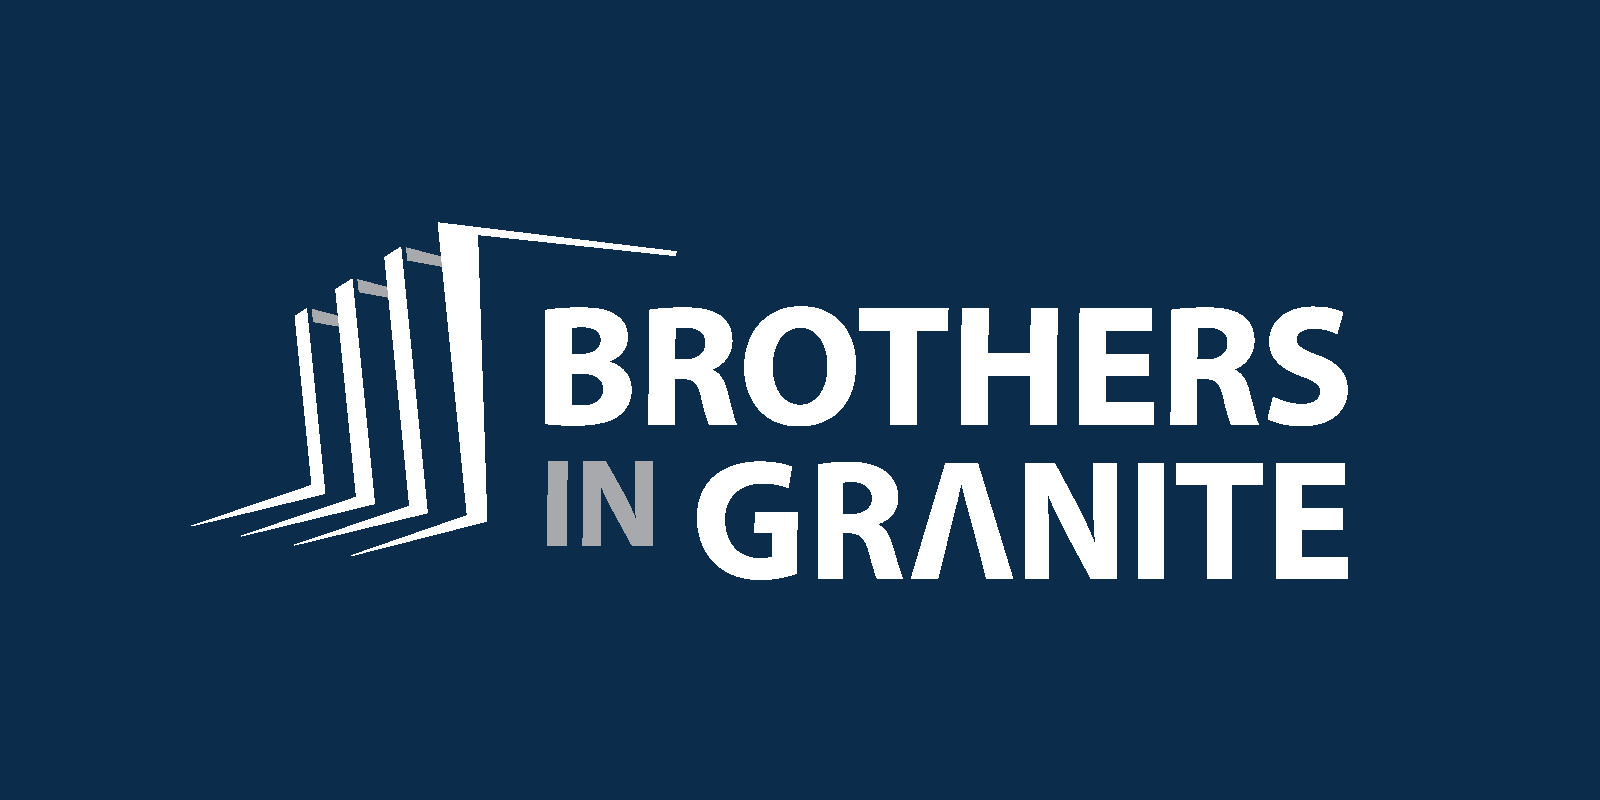 Brothers in Granite